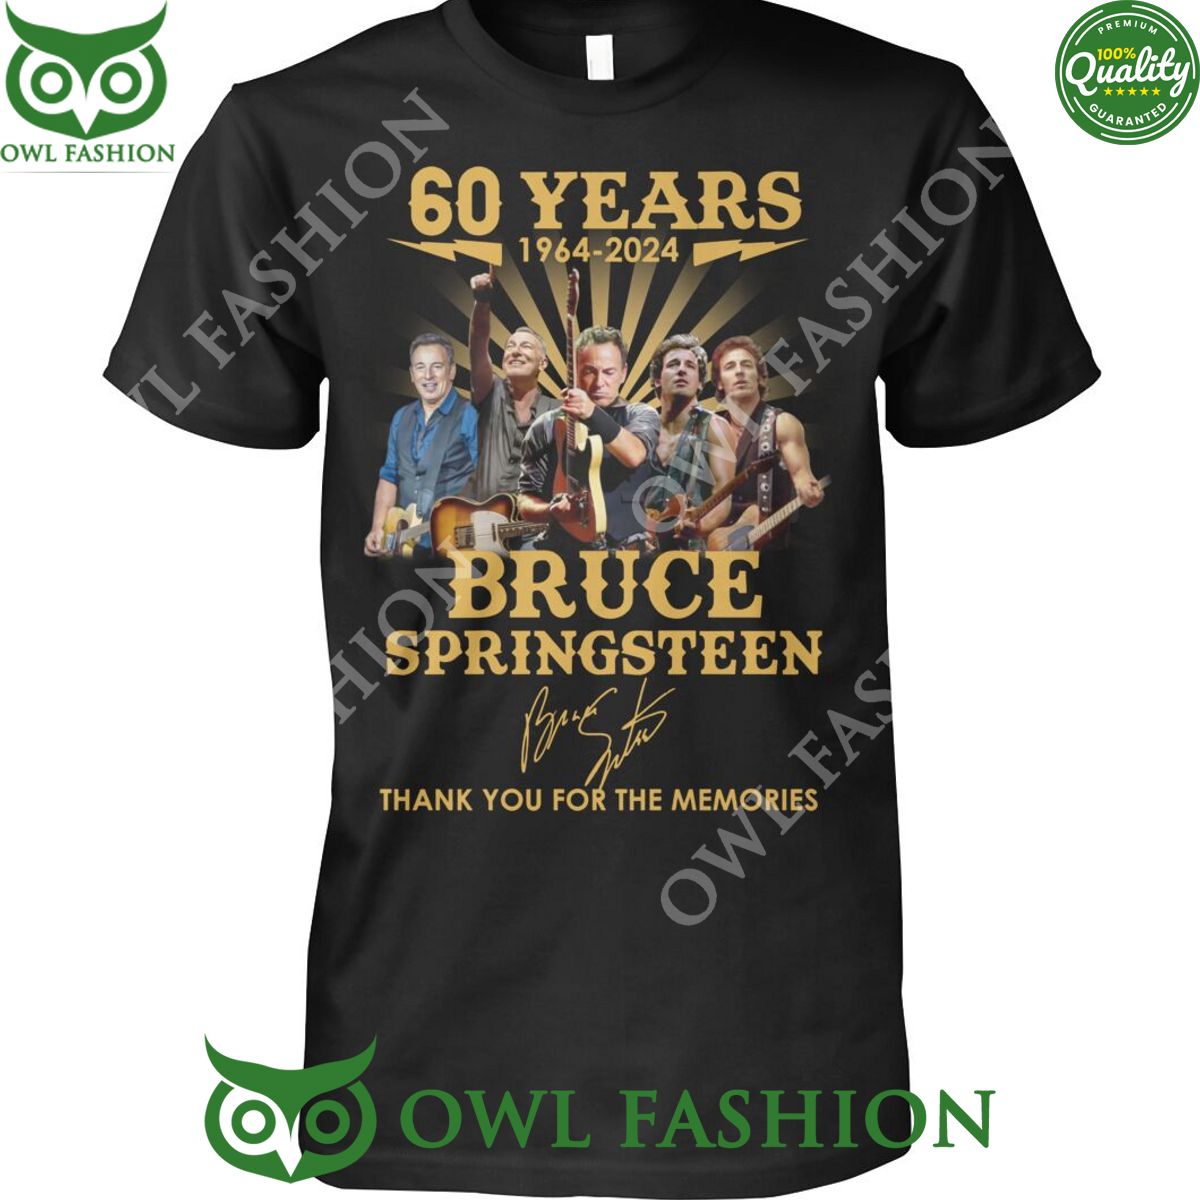 Bruce Springsteen 60 years 1964 2024 memories rock singer t shirt